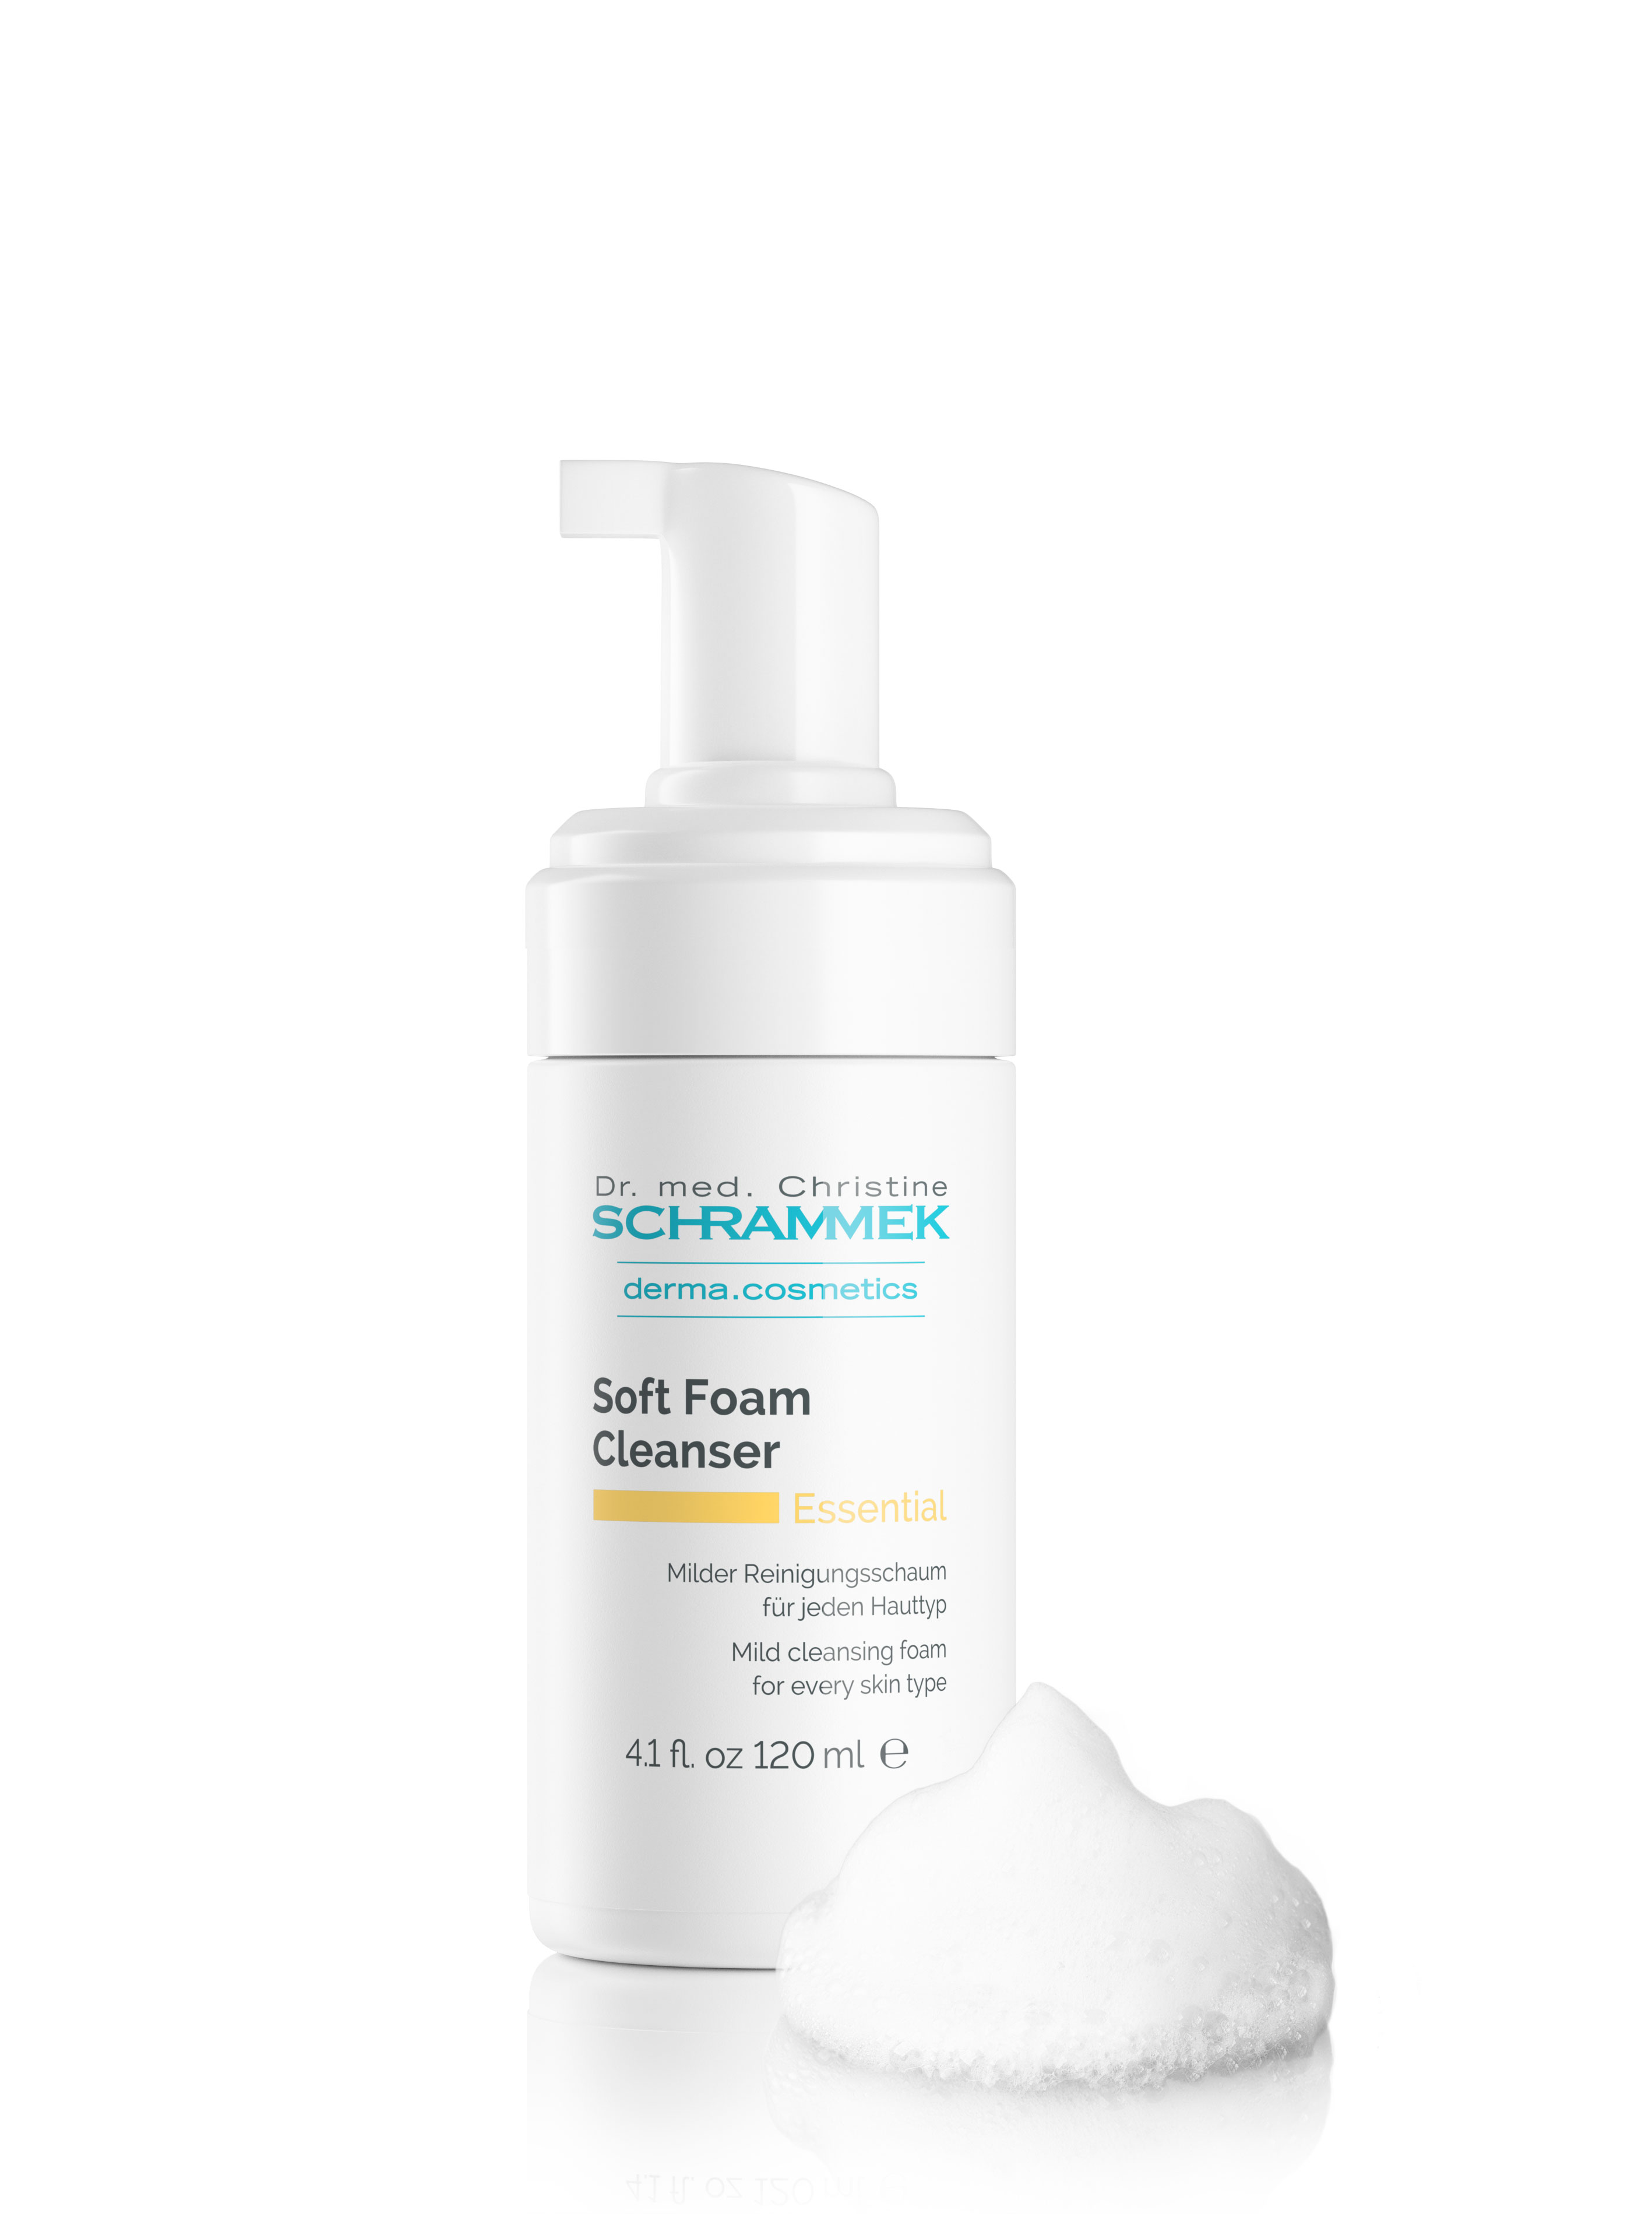 Soft Foam Cleanser Очищающая пенка для всех типов кожи 120 мл